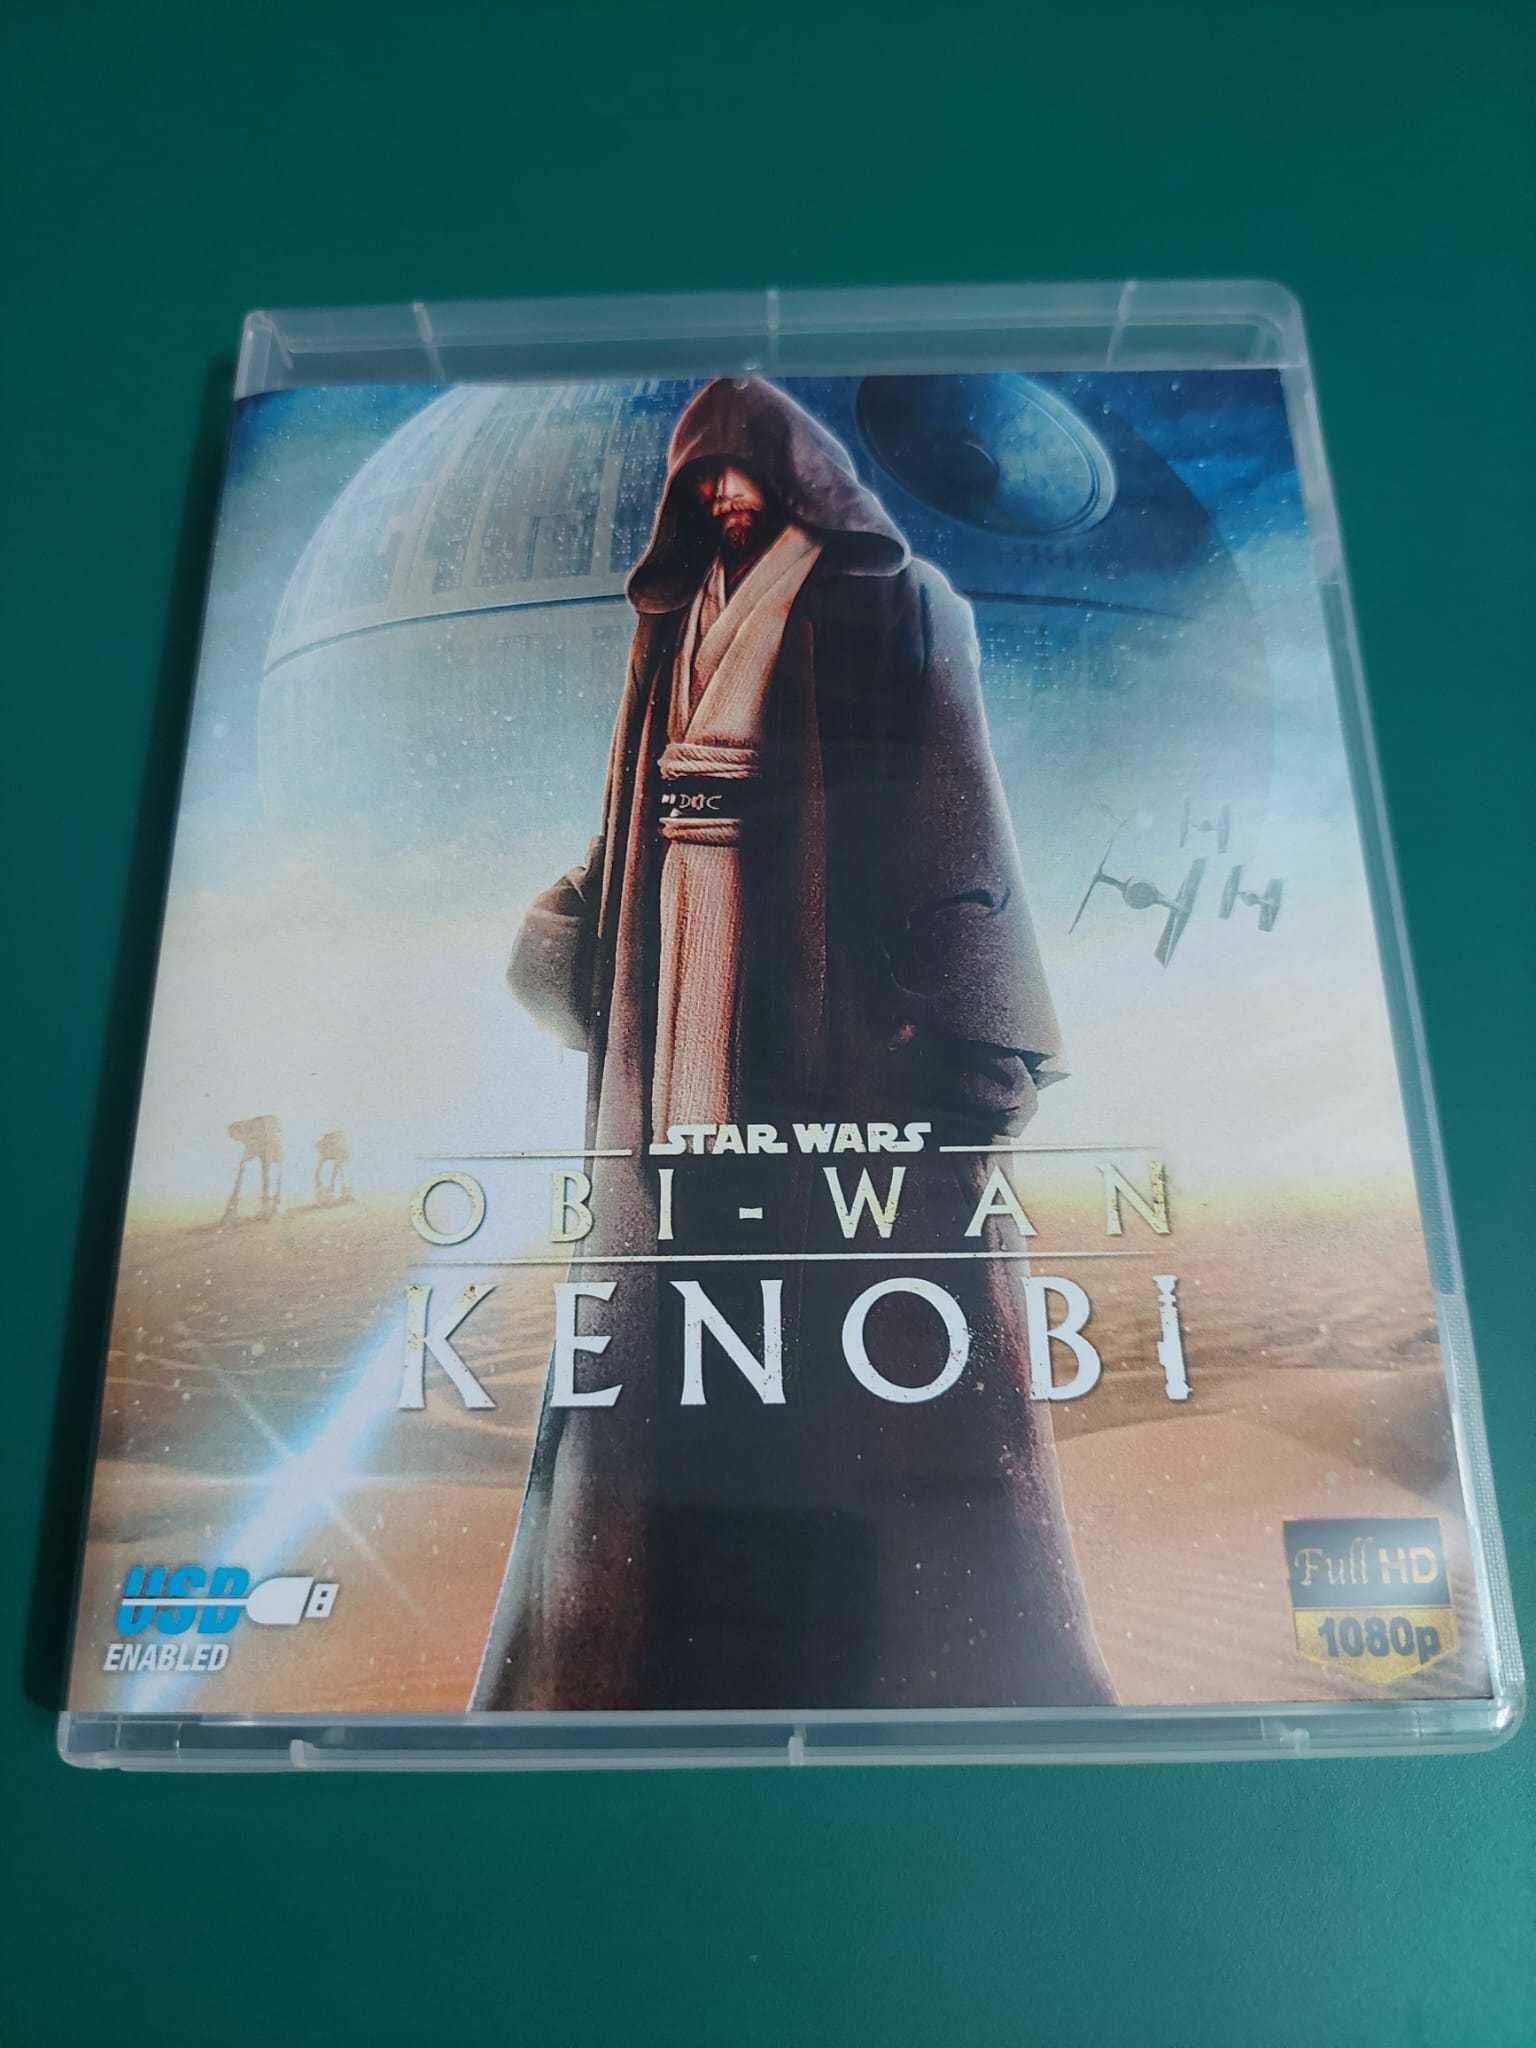 Obi-Wan Kenobi - sezonul 1 complet - Stick USB 1920/1080p FullHD